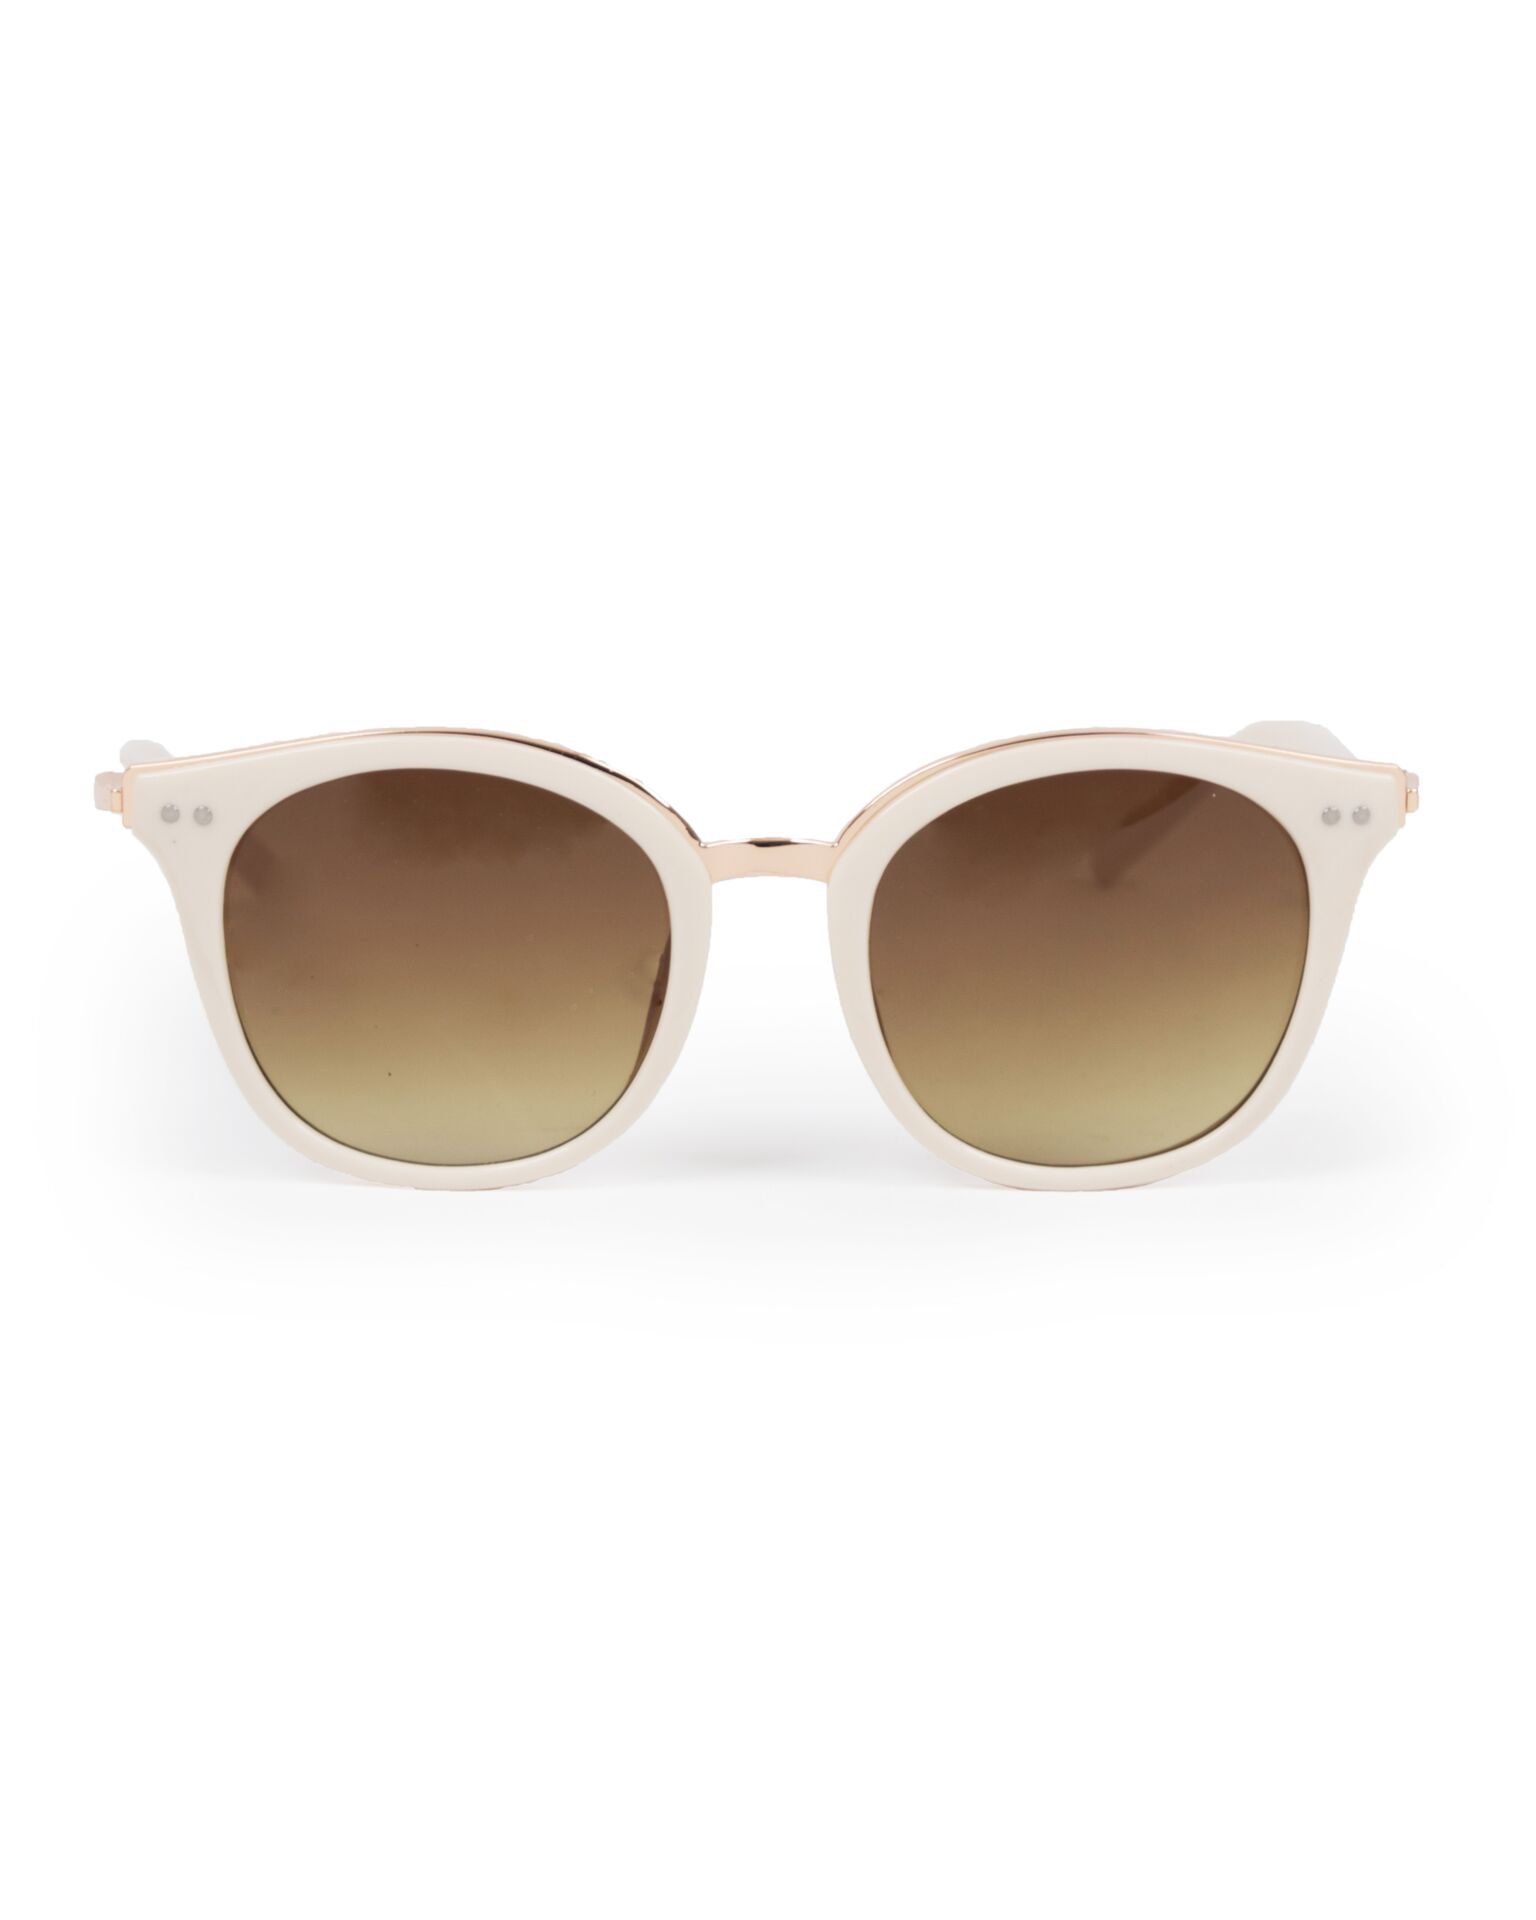 Powder Adele Sunglasses in Cream/Gold